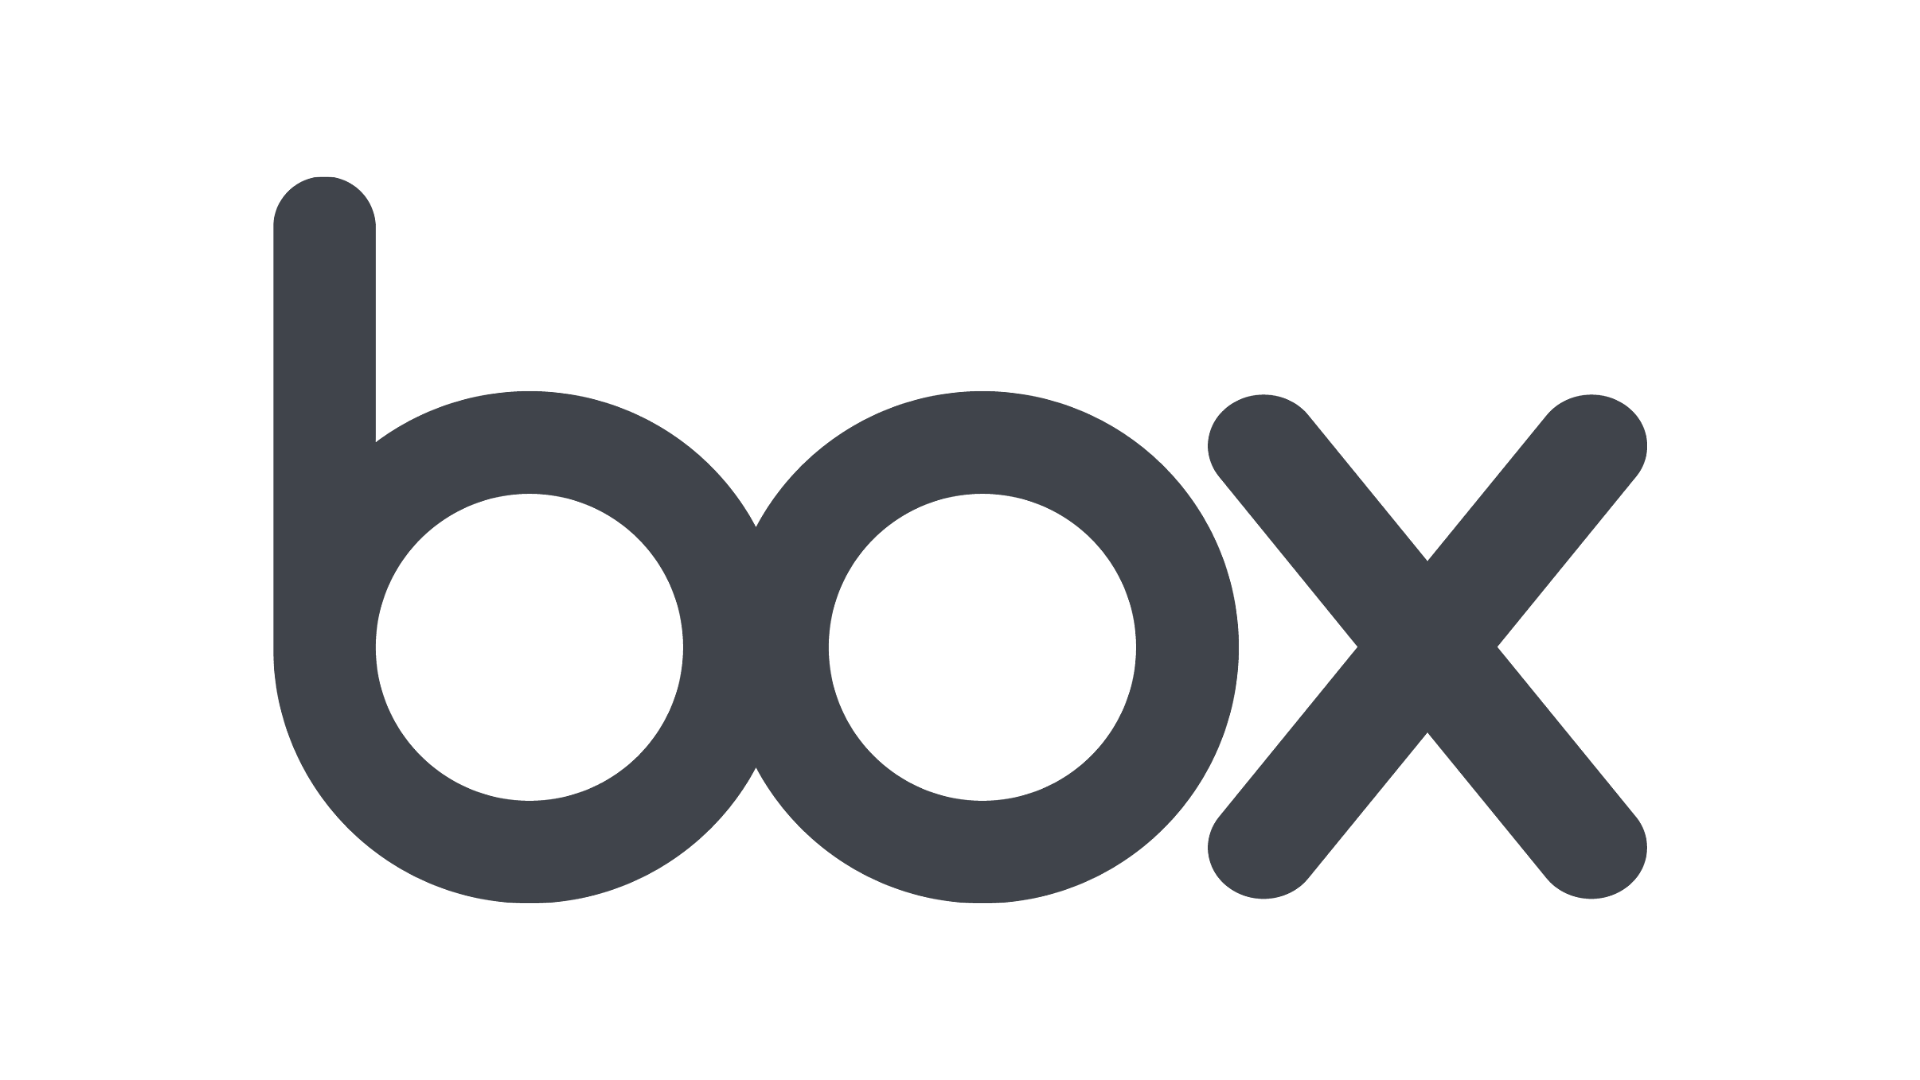 Box Grayscale logo